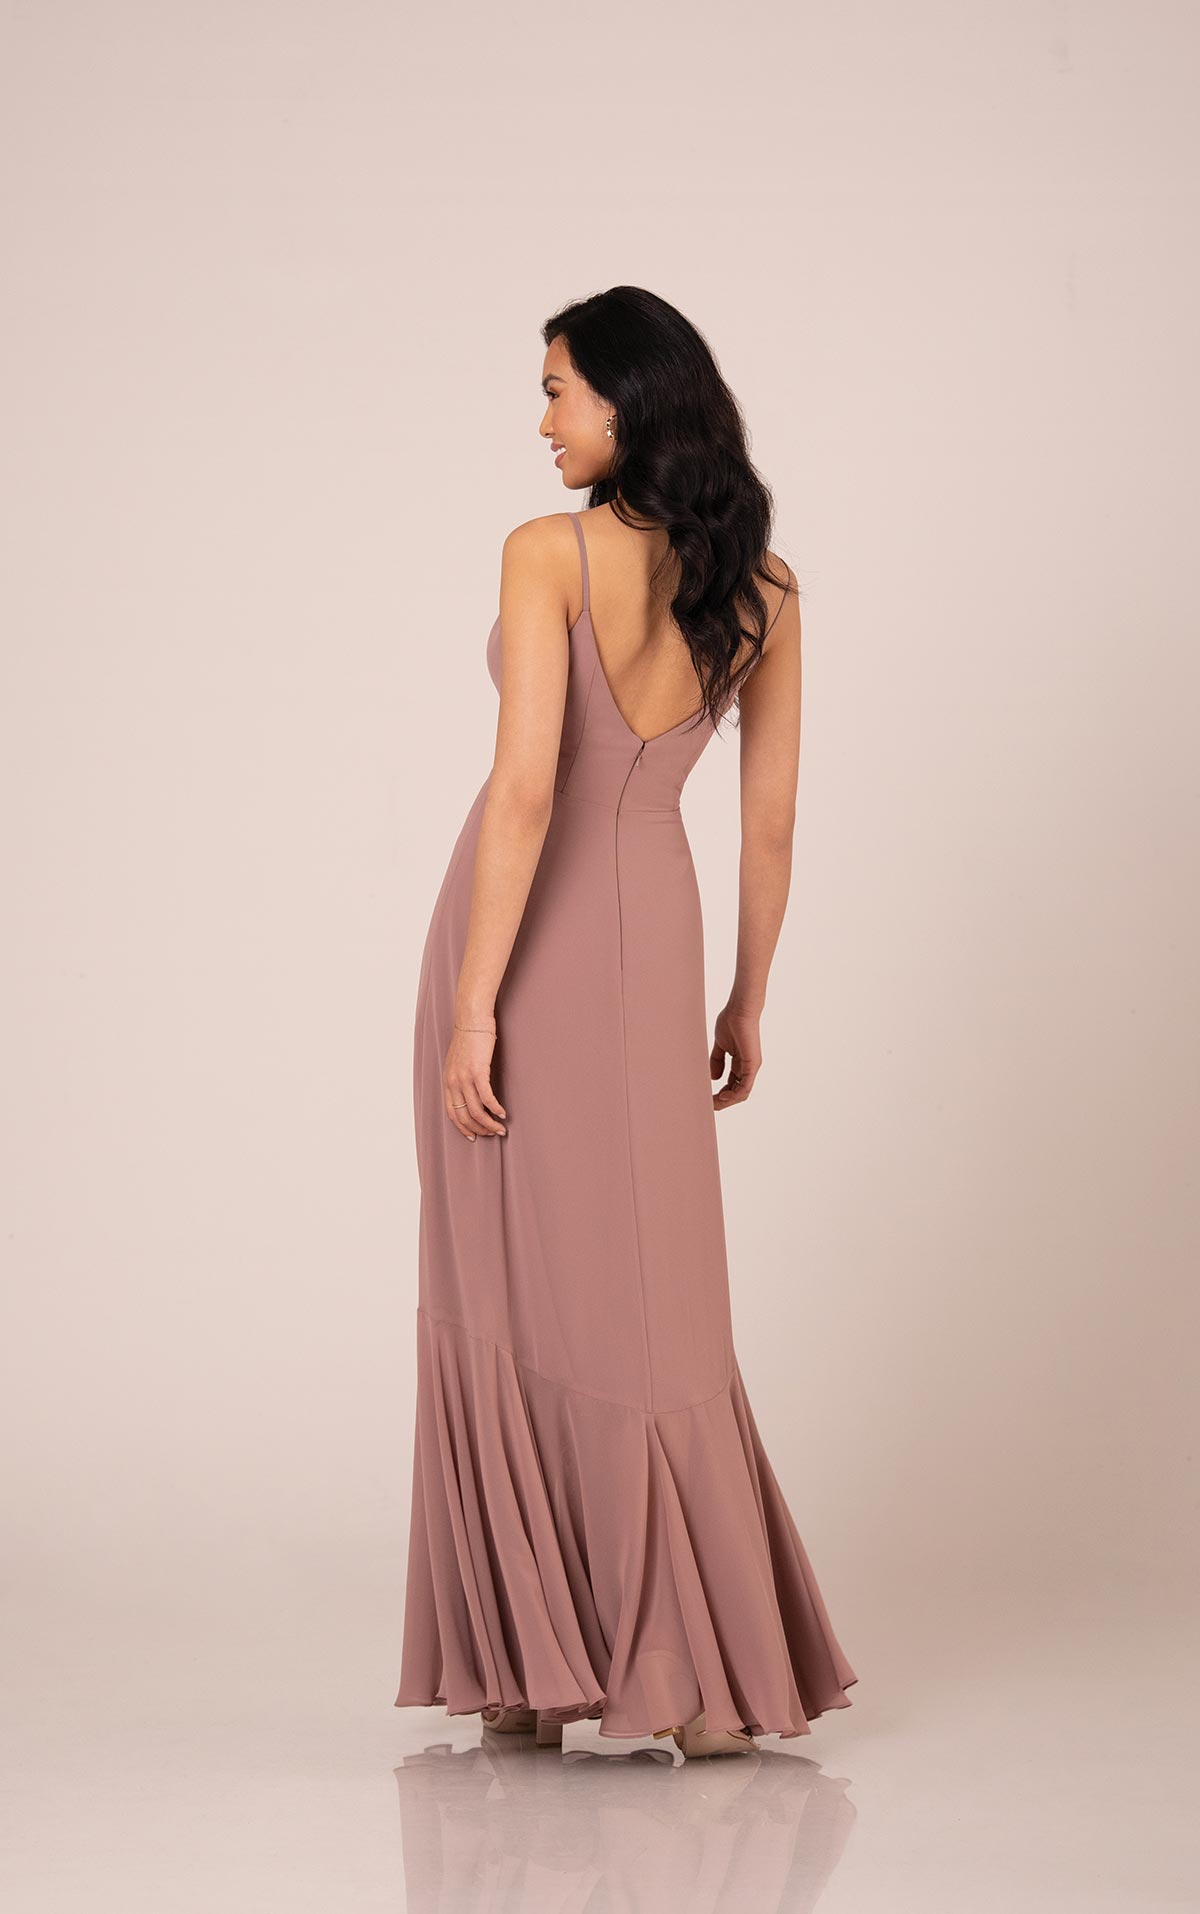 Sorella Vita Dress Style 9582 (Harvest Gold-Size 10) Prom, Ball., Black-tie, Bridesmaid, Pageant